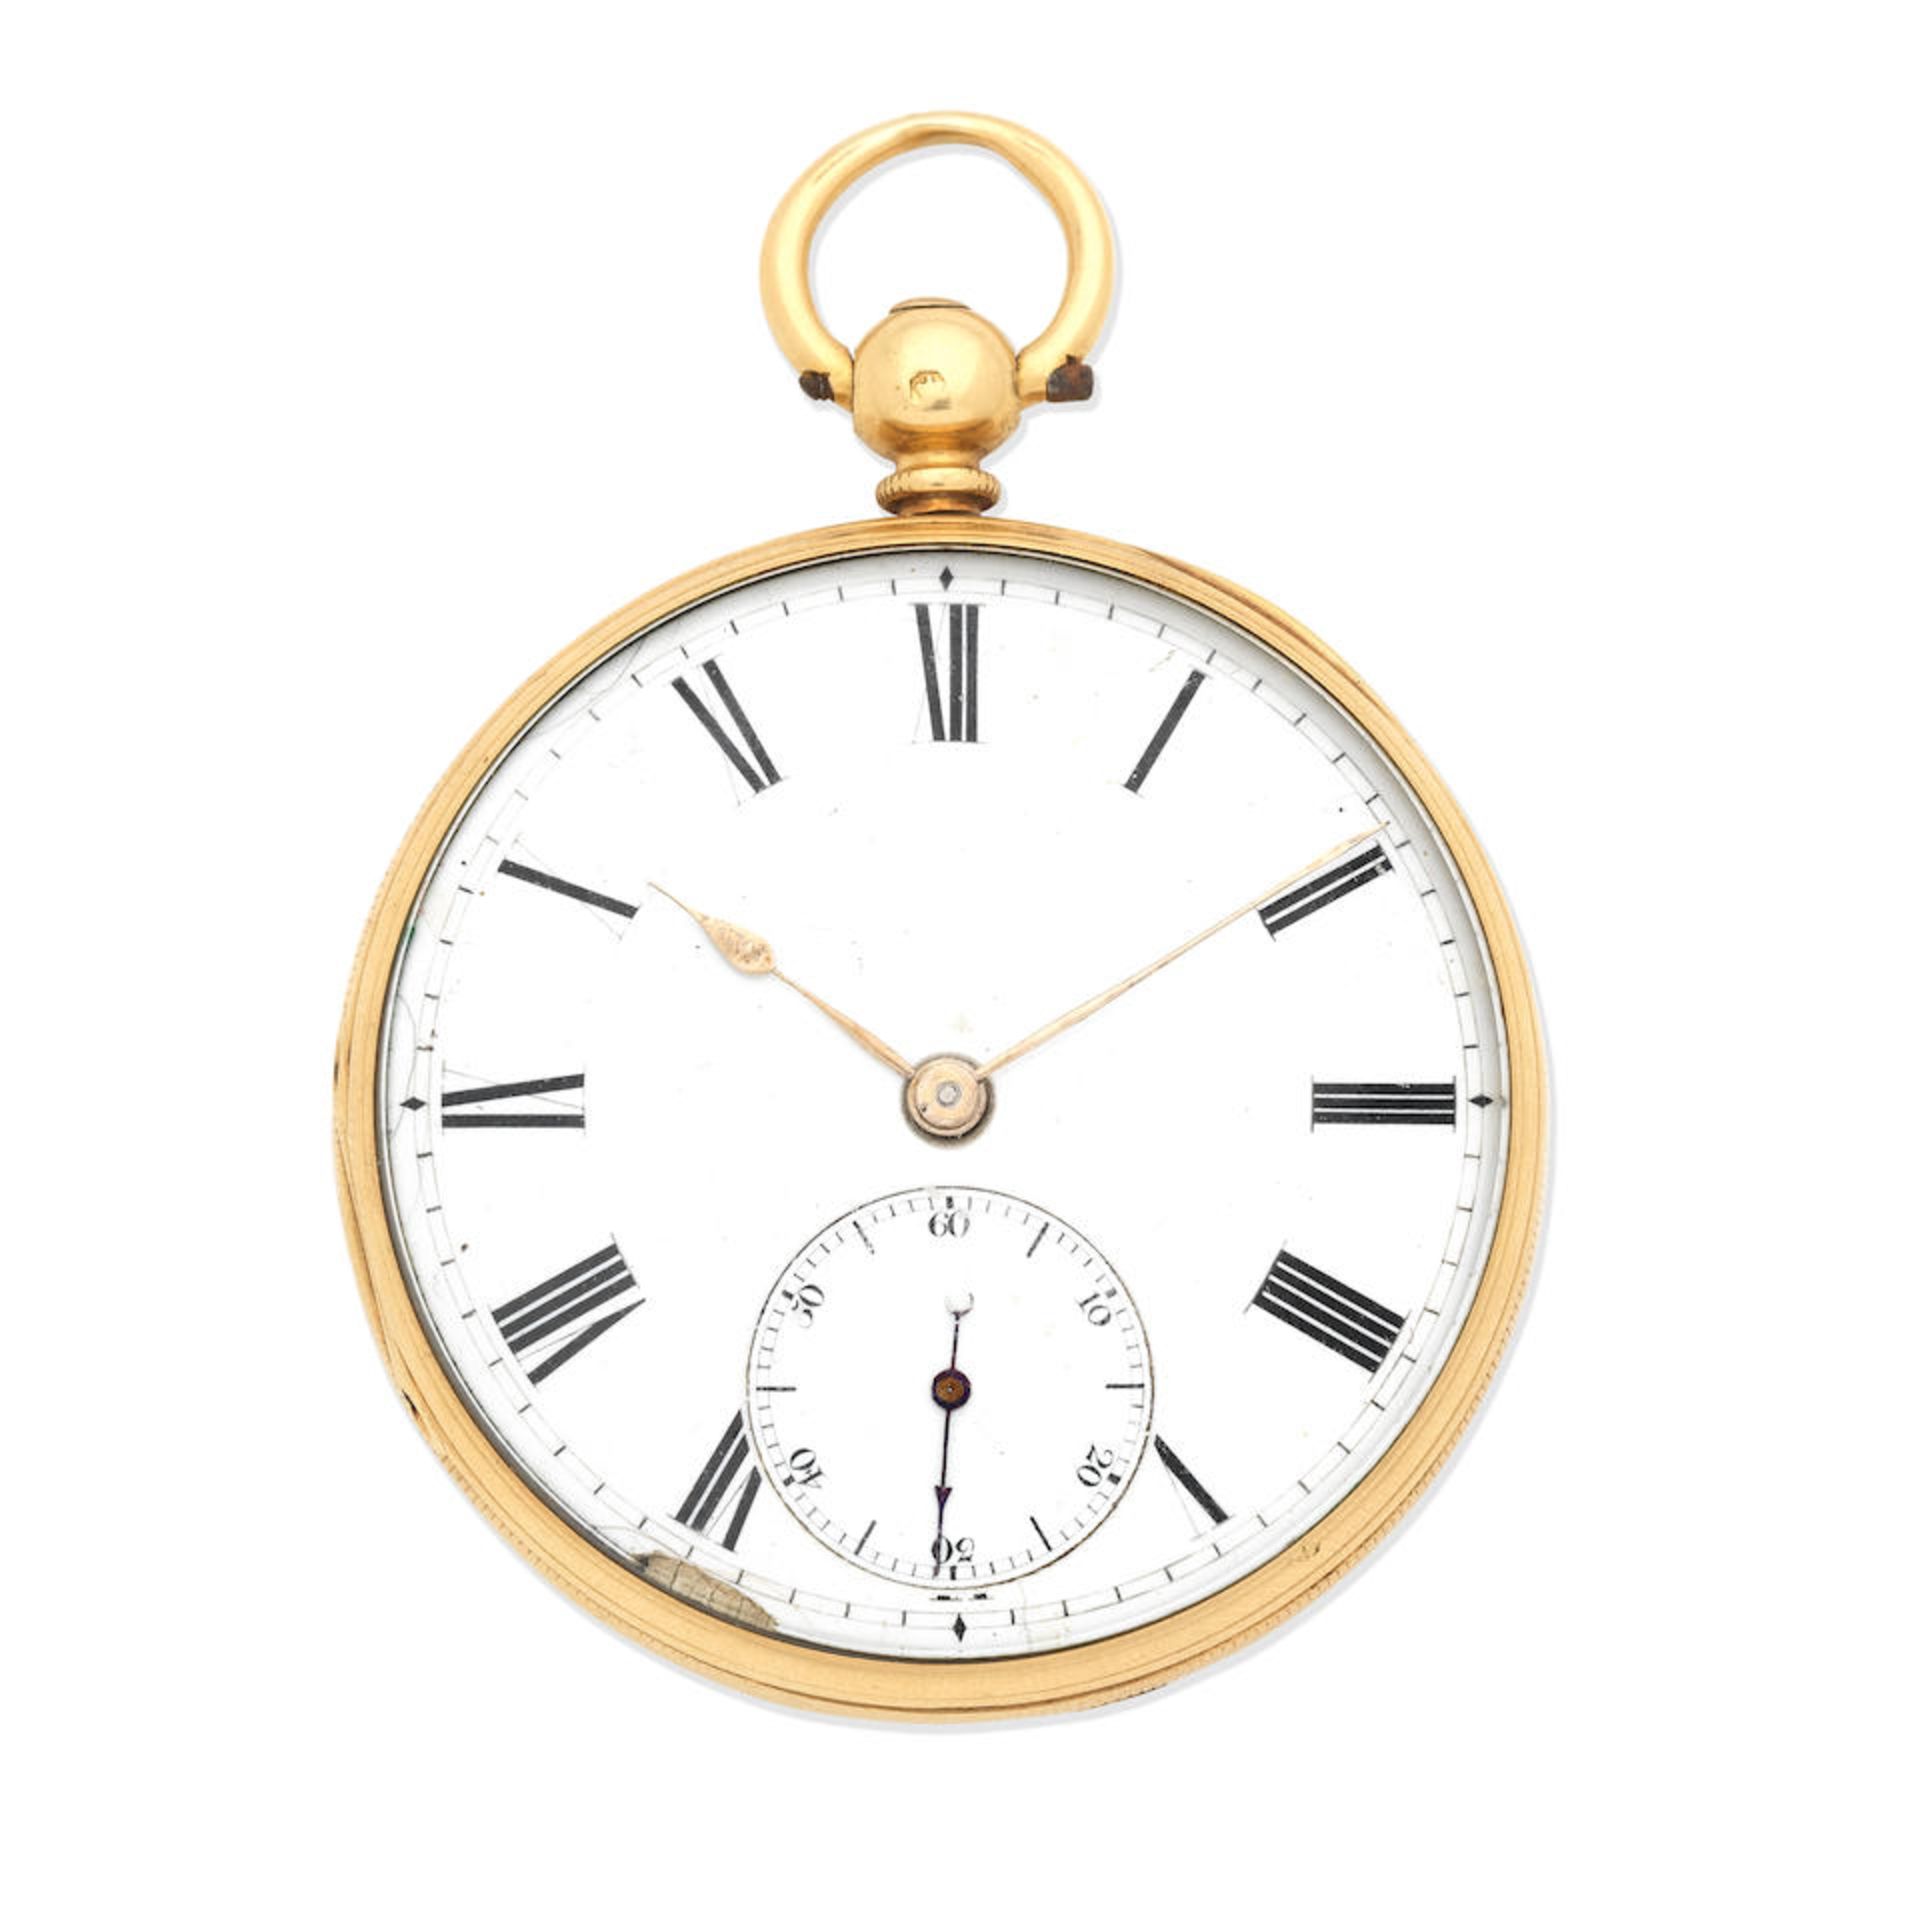 An 18K gold key wind open face pocket watch London Hallmark for 1861